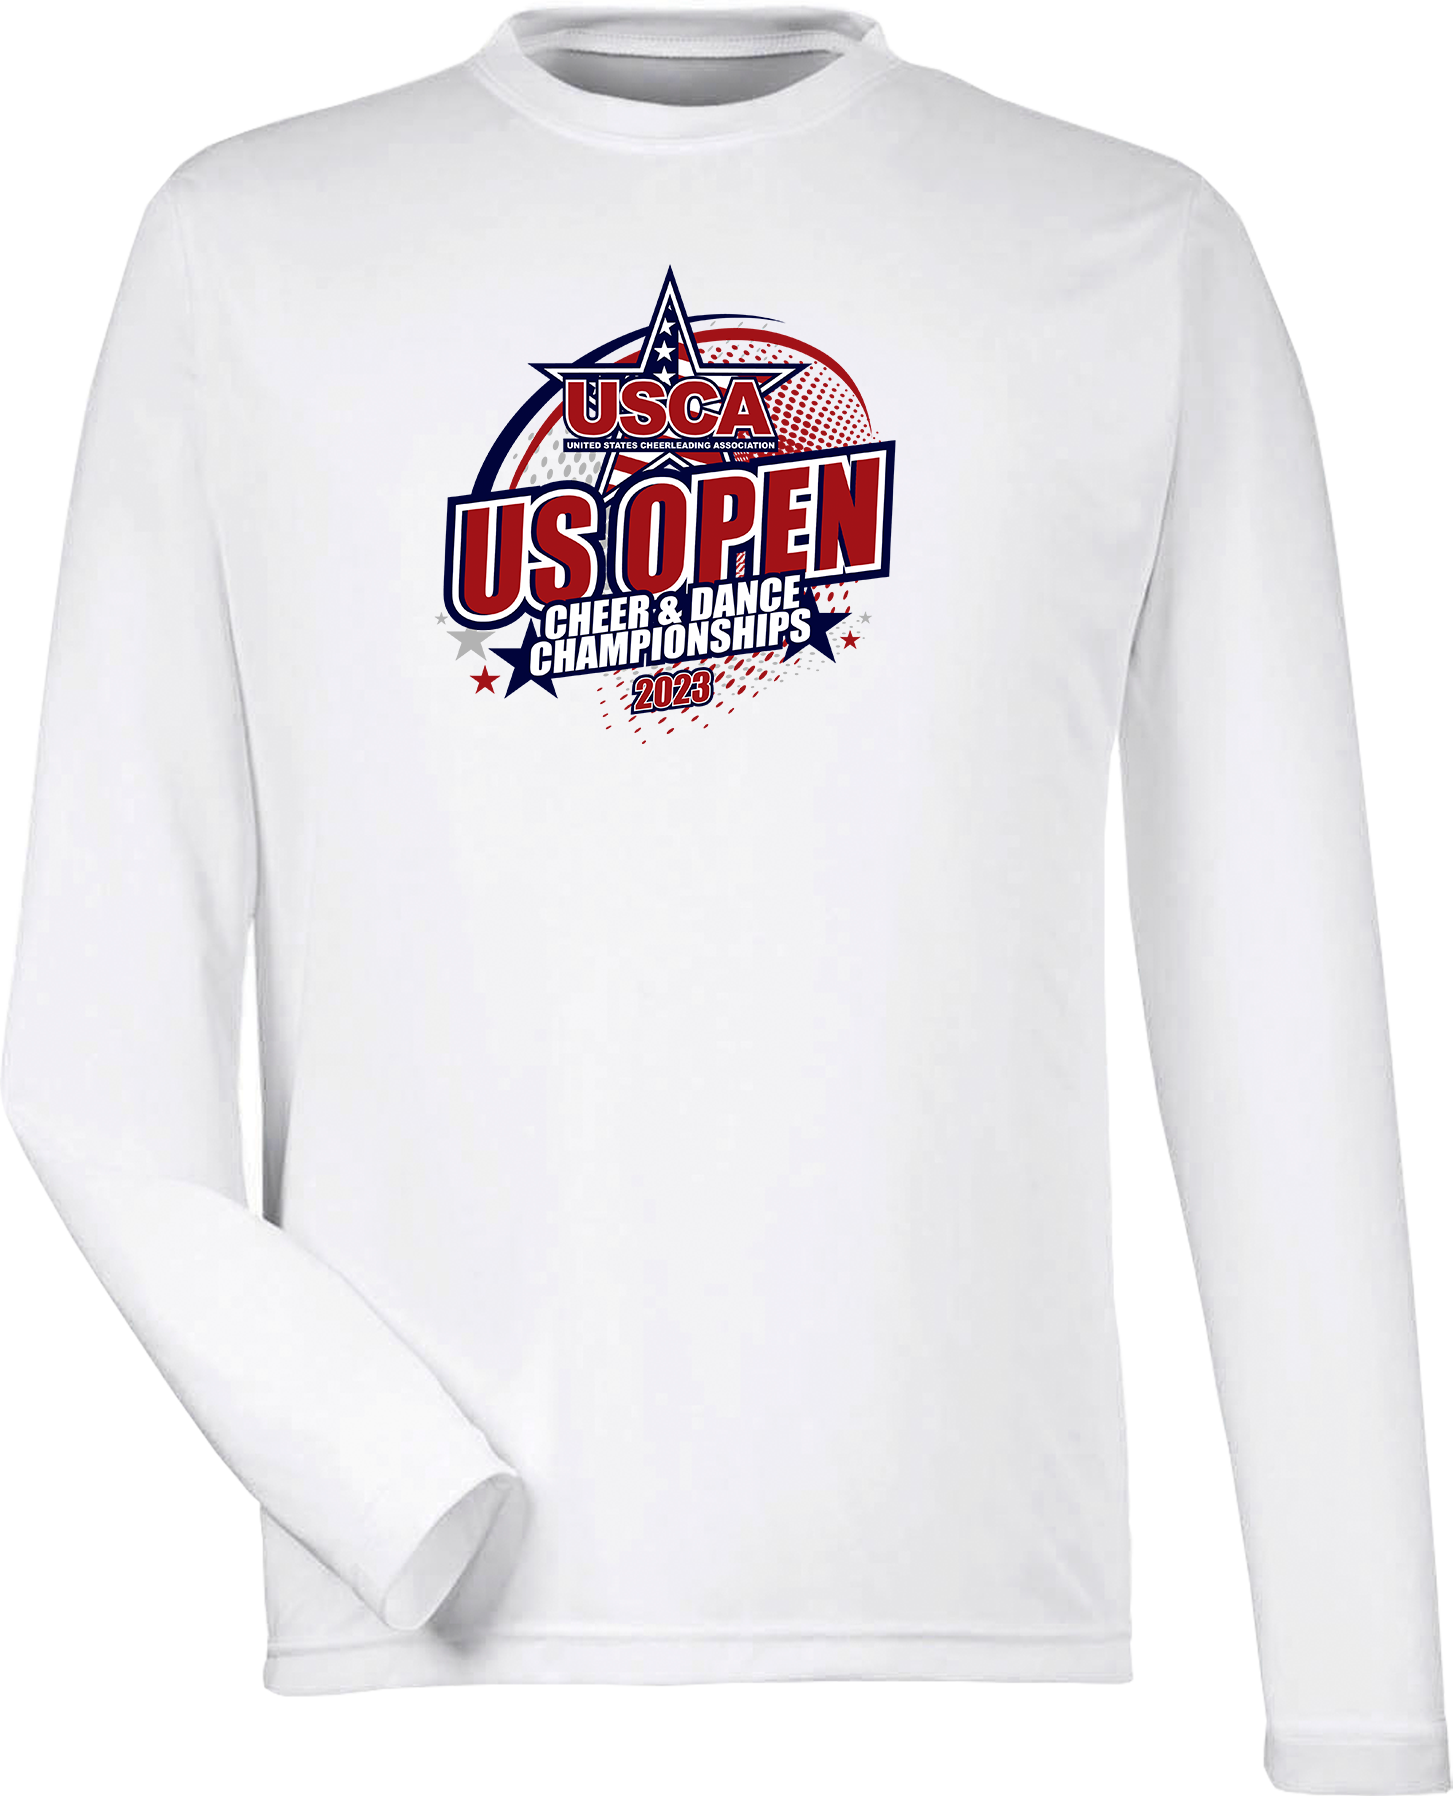 PERFORMANCE SHIRTS - 2023 US Open Cheerleading & Dance Championship